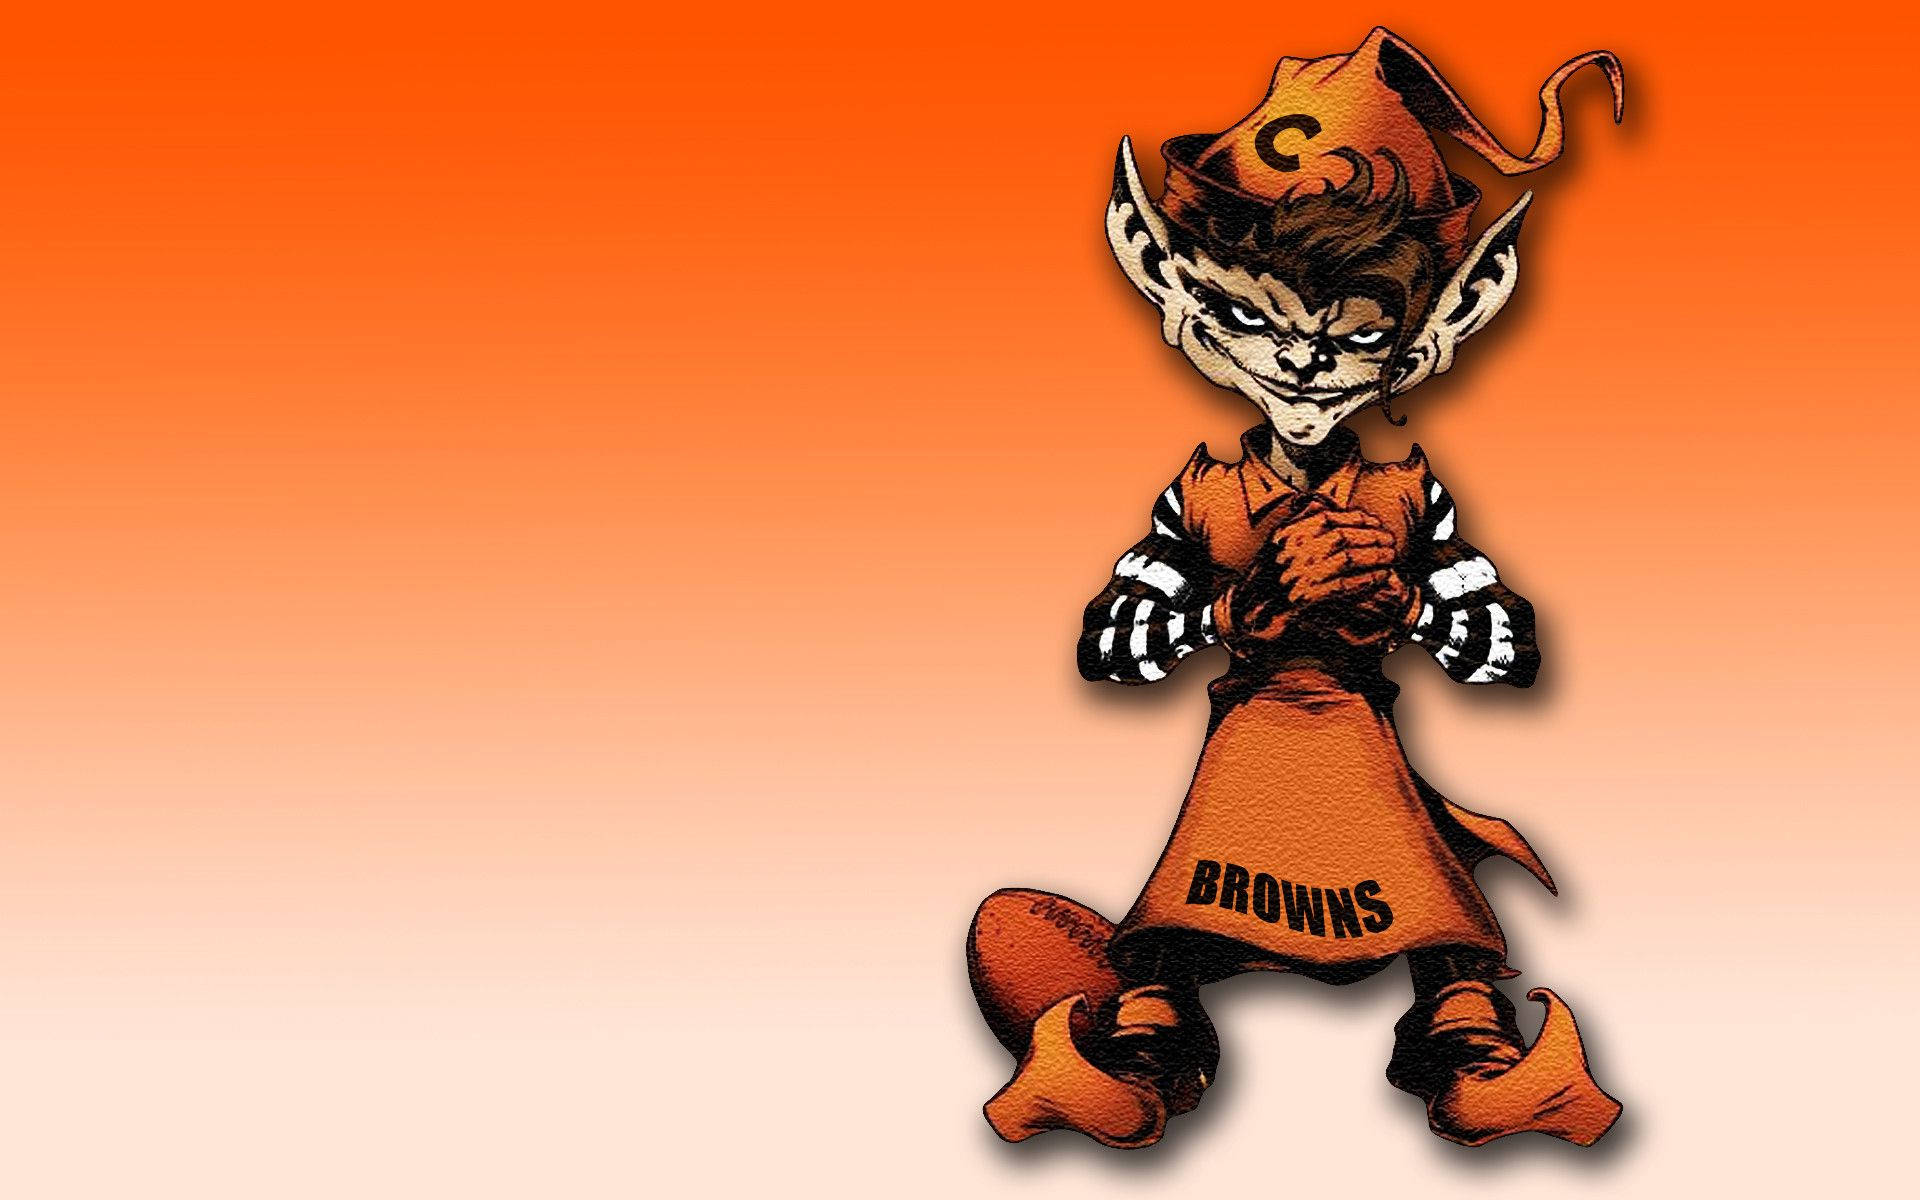 Cleveland Browns' Mascot